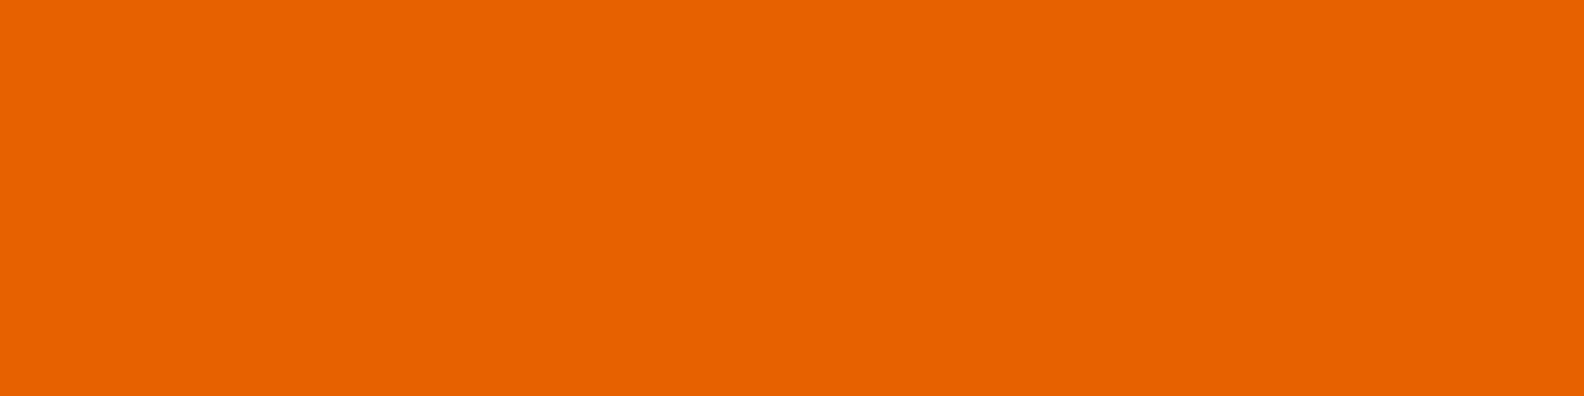 1584x396 Spanish Orange Solid Color Background